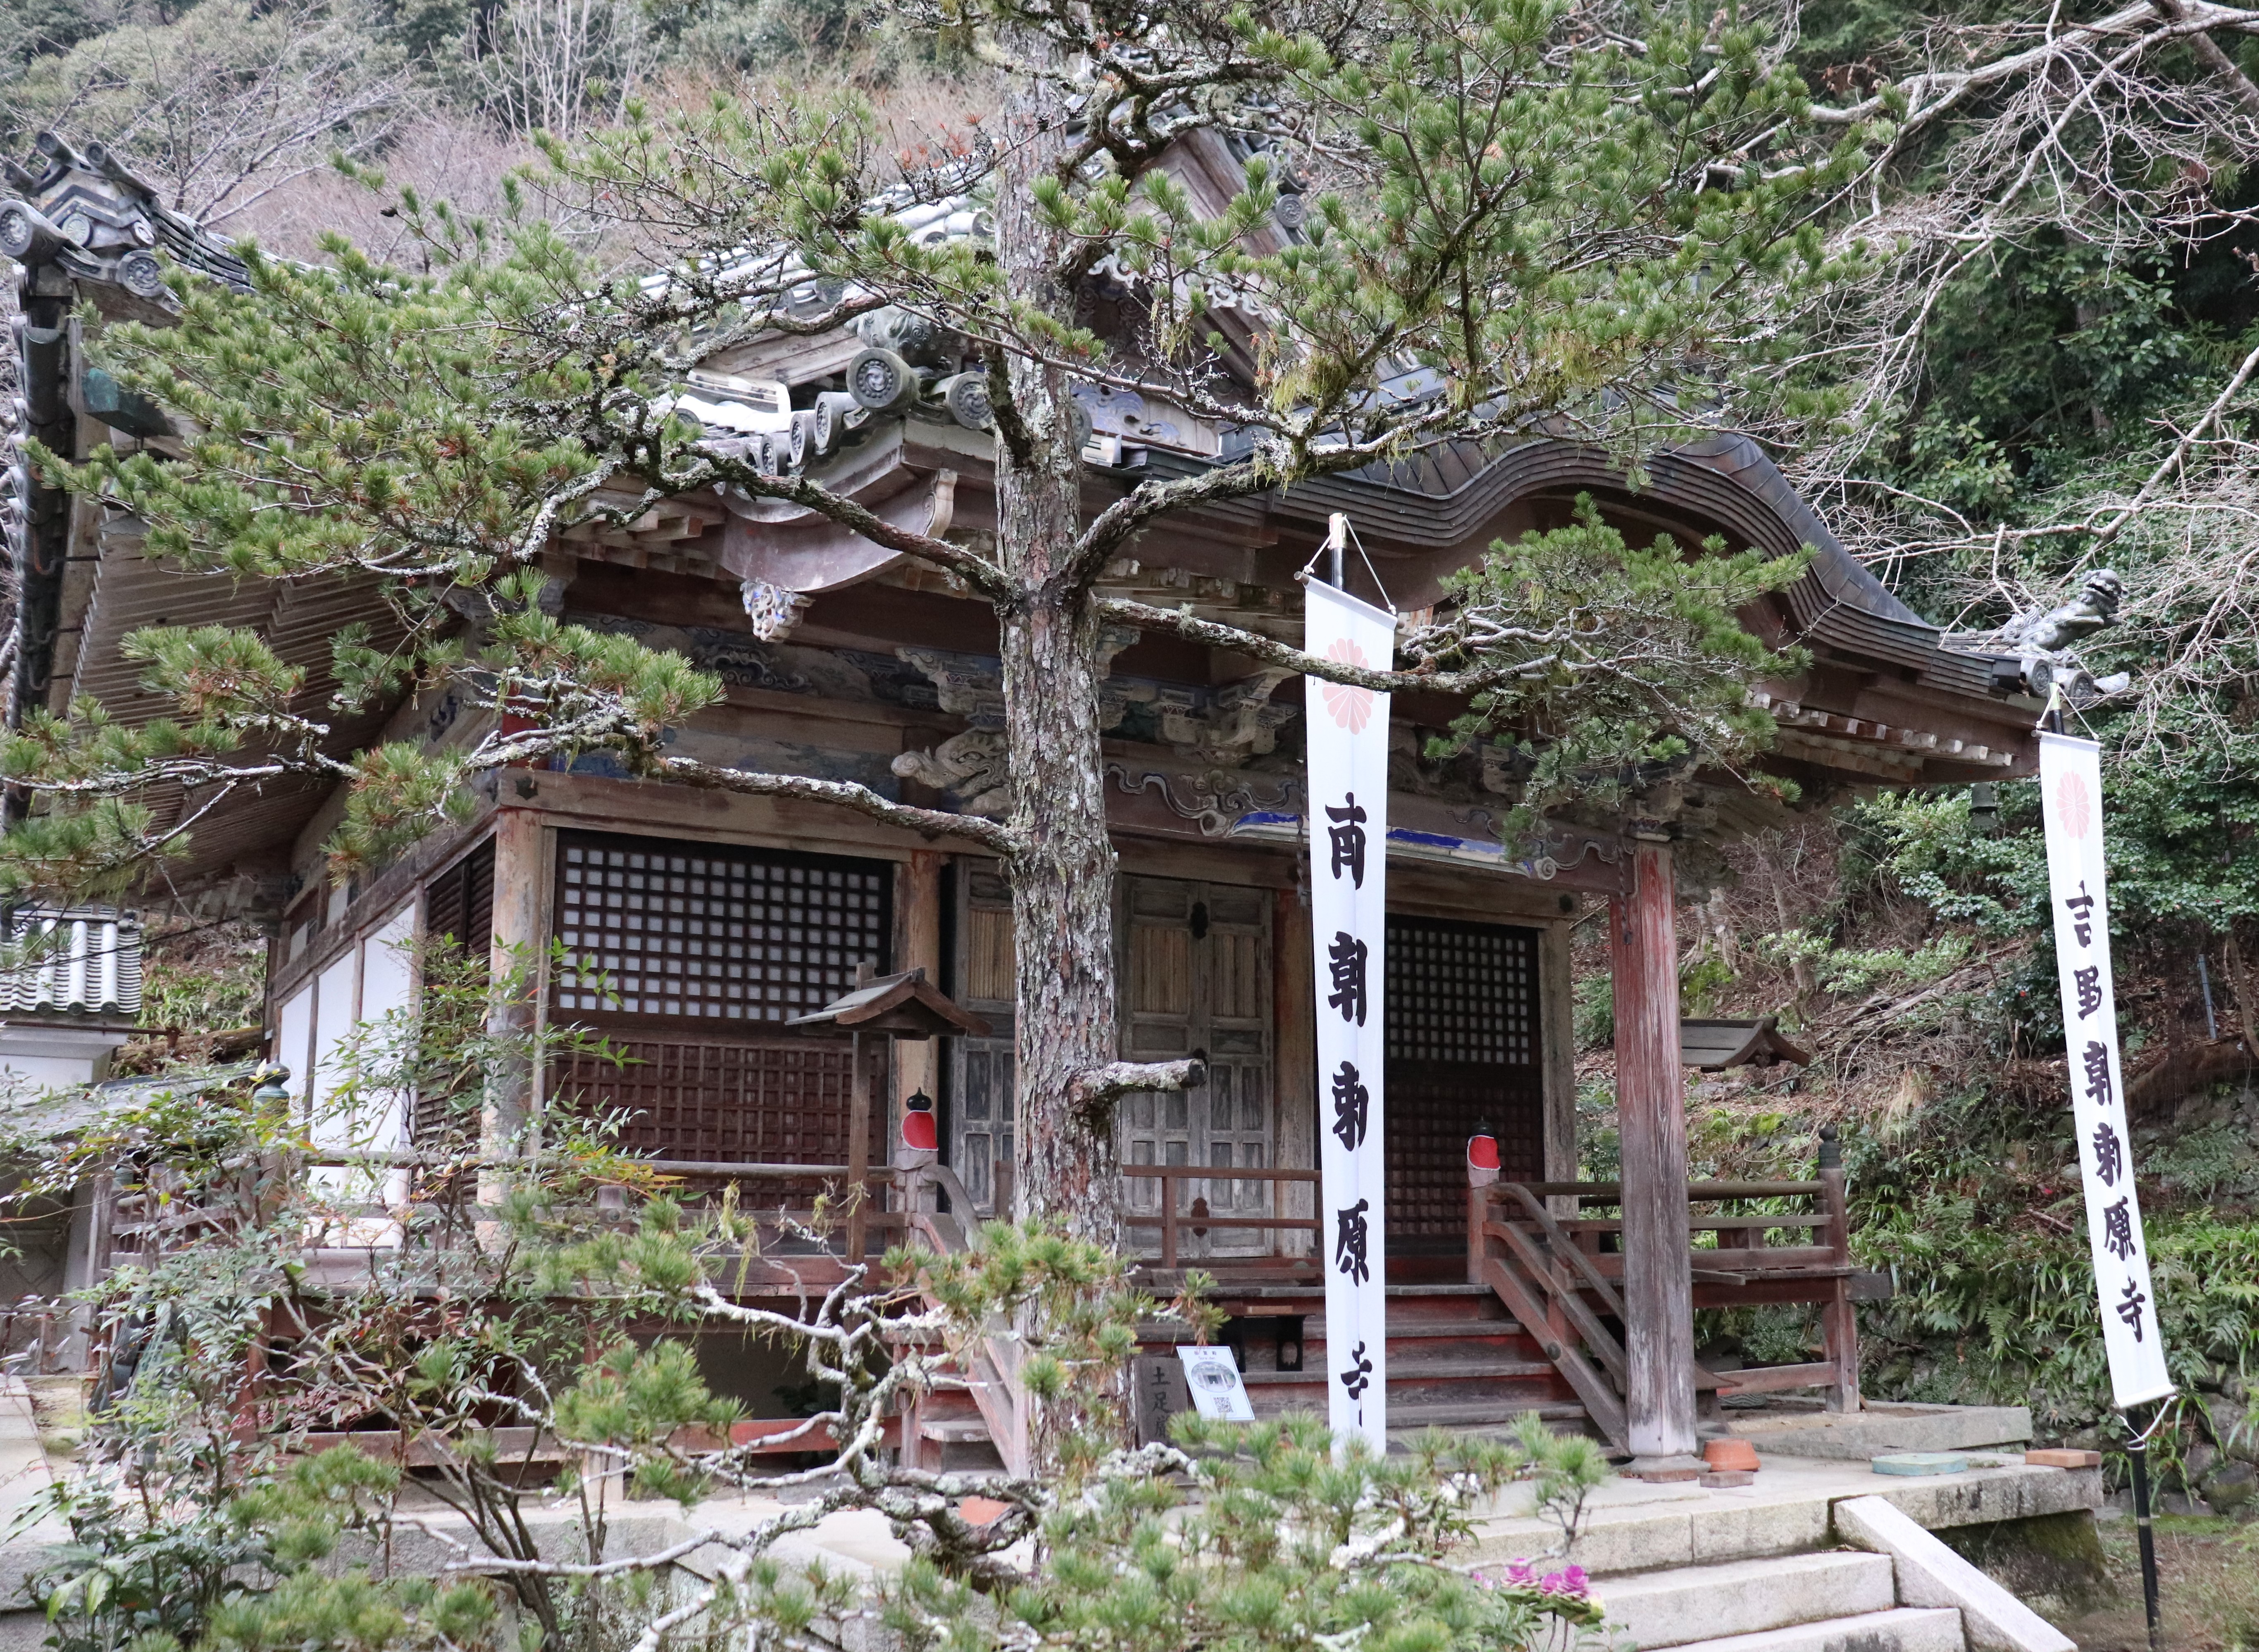 goryo-den of nyoirin-ji temple in yoshino